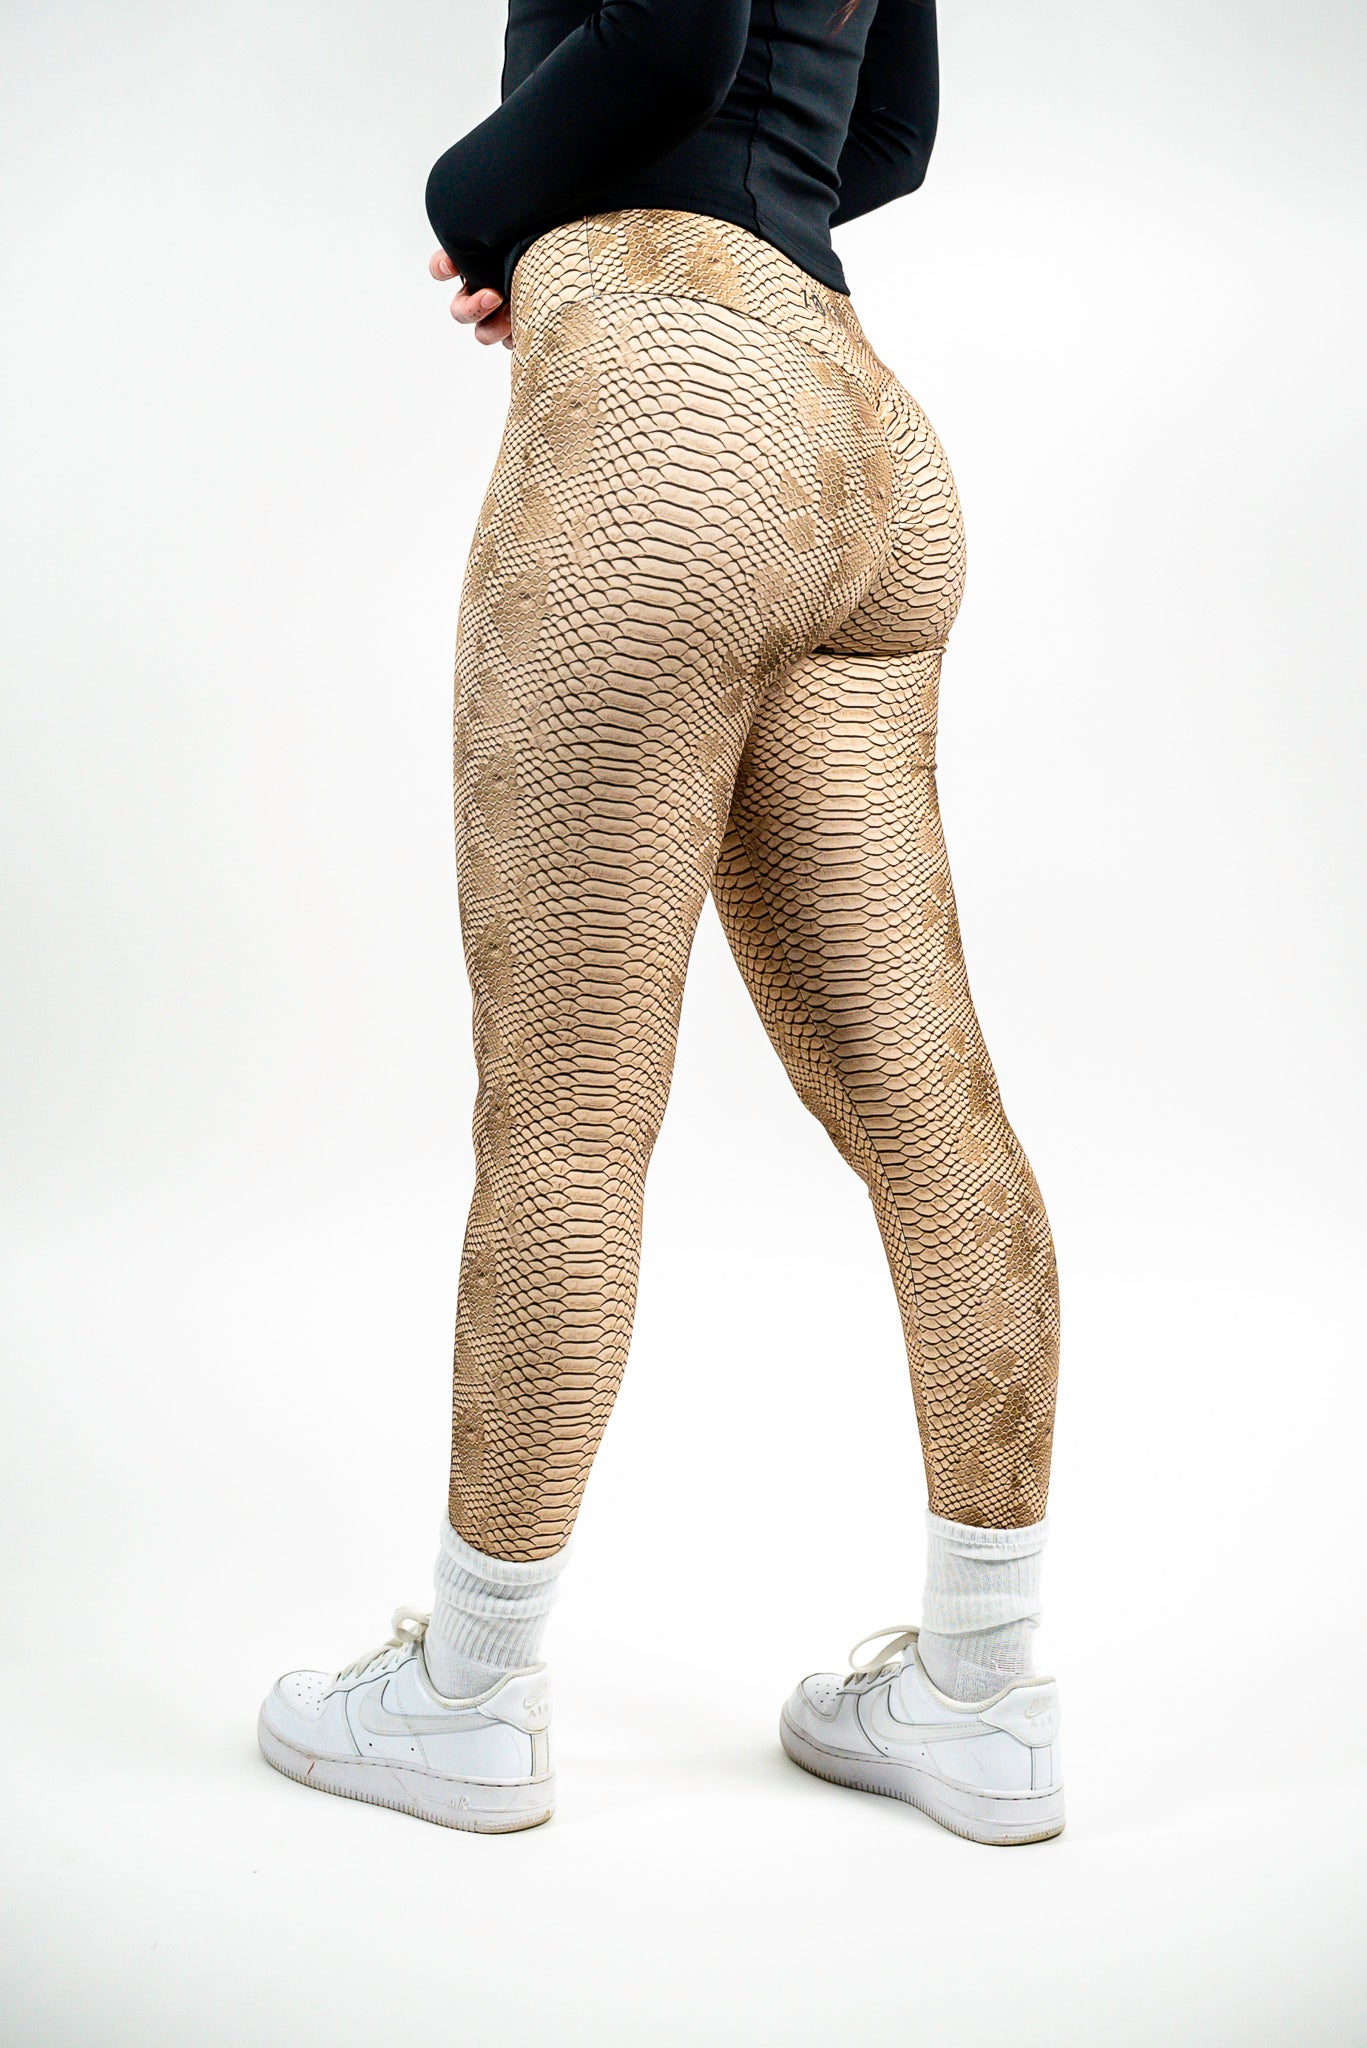 Ikaika- Snakeskin Brazilian Legging (Bum Sculpting & Slimming)